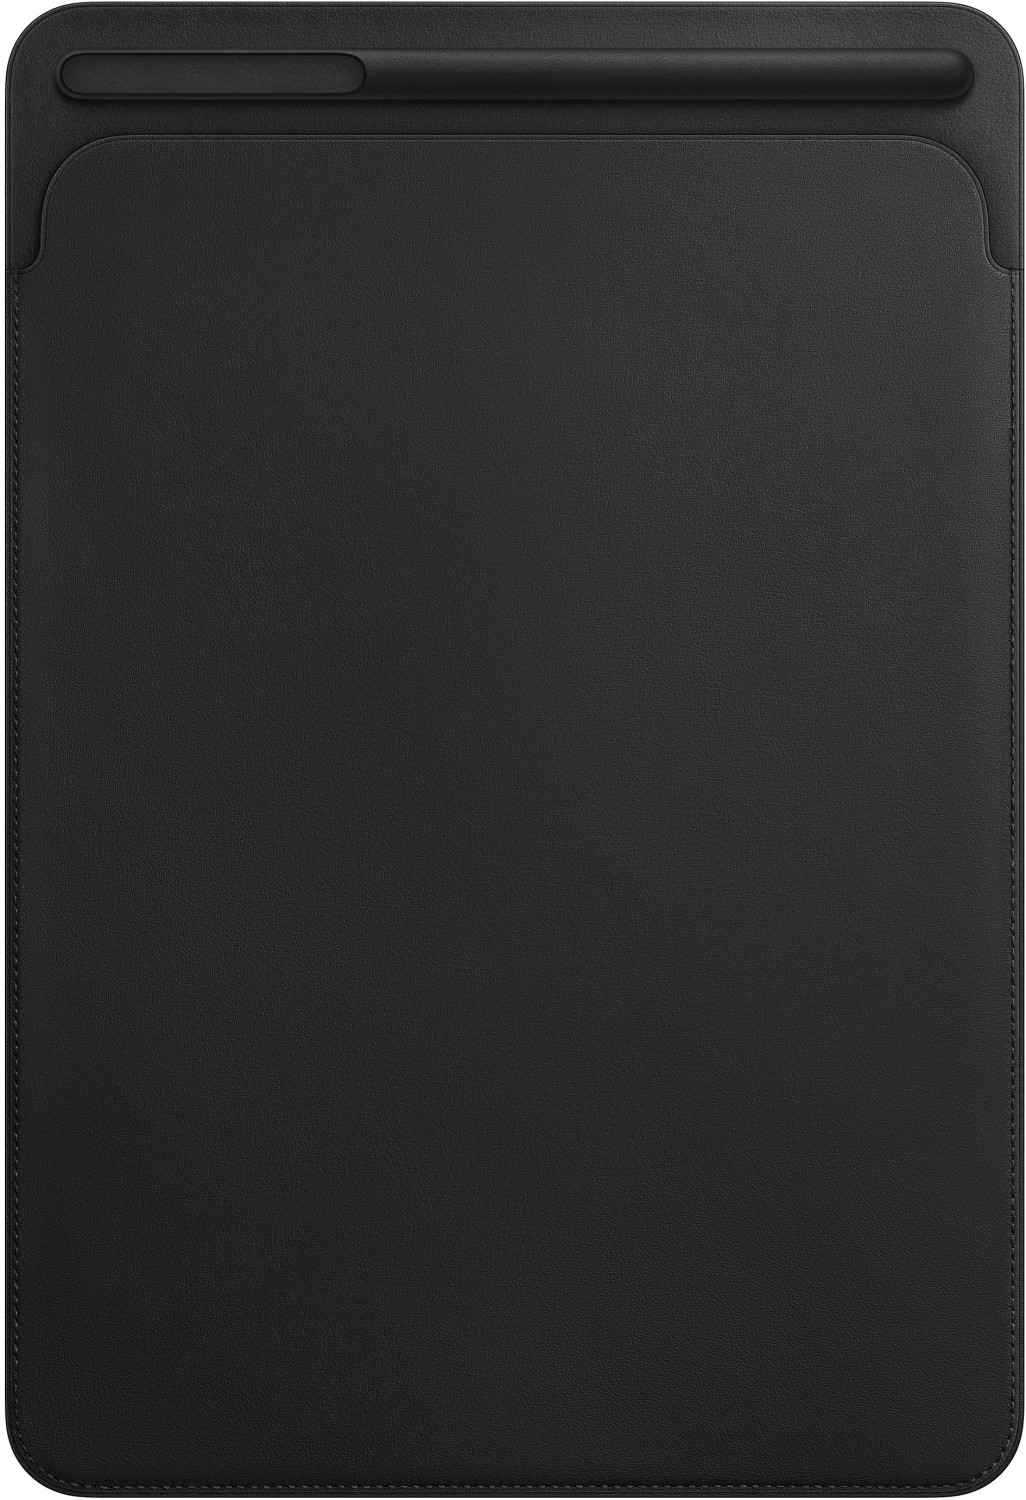 Apple iPad Pro 10.5 Leather Sleeve Black (MPU62ZM/A)